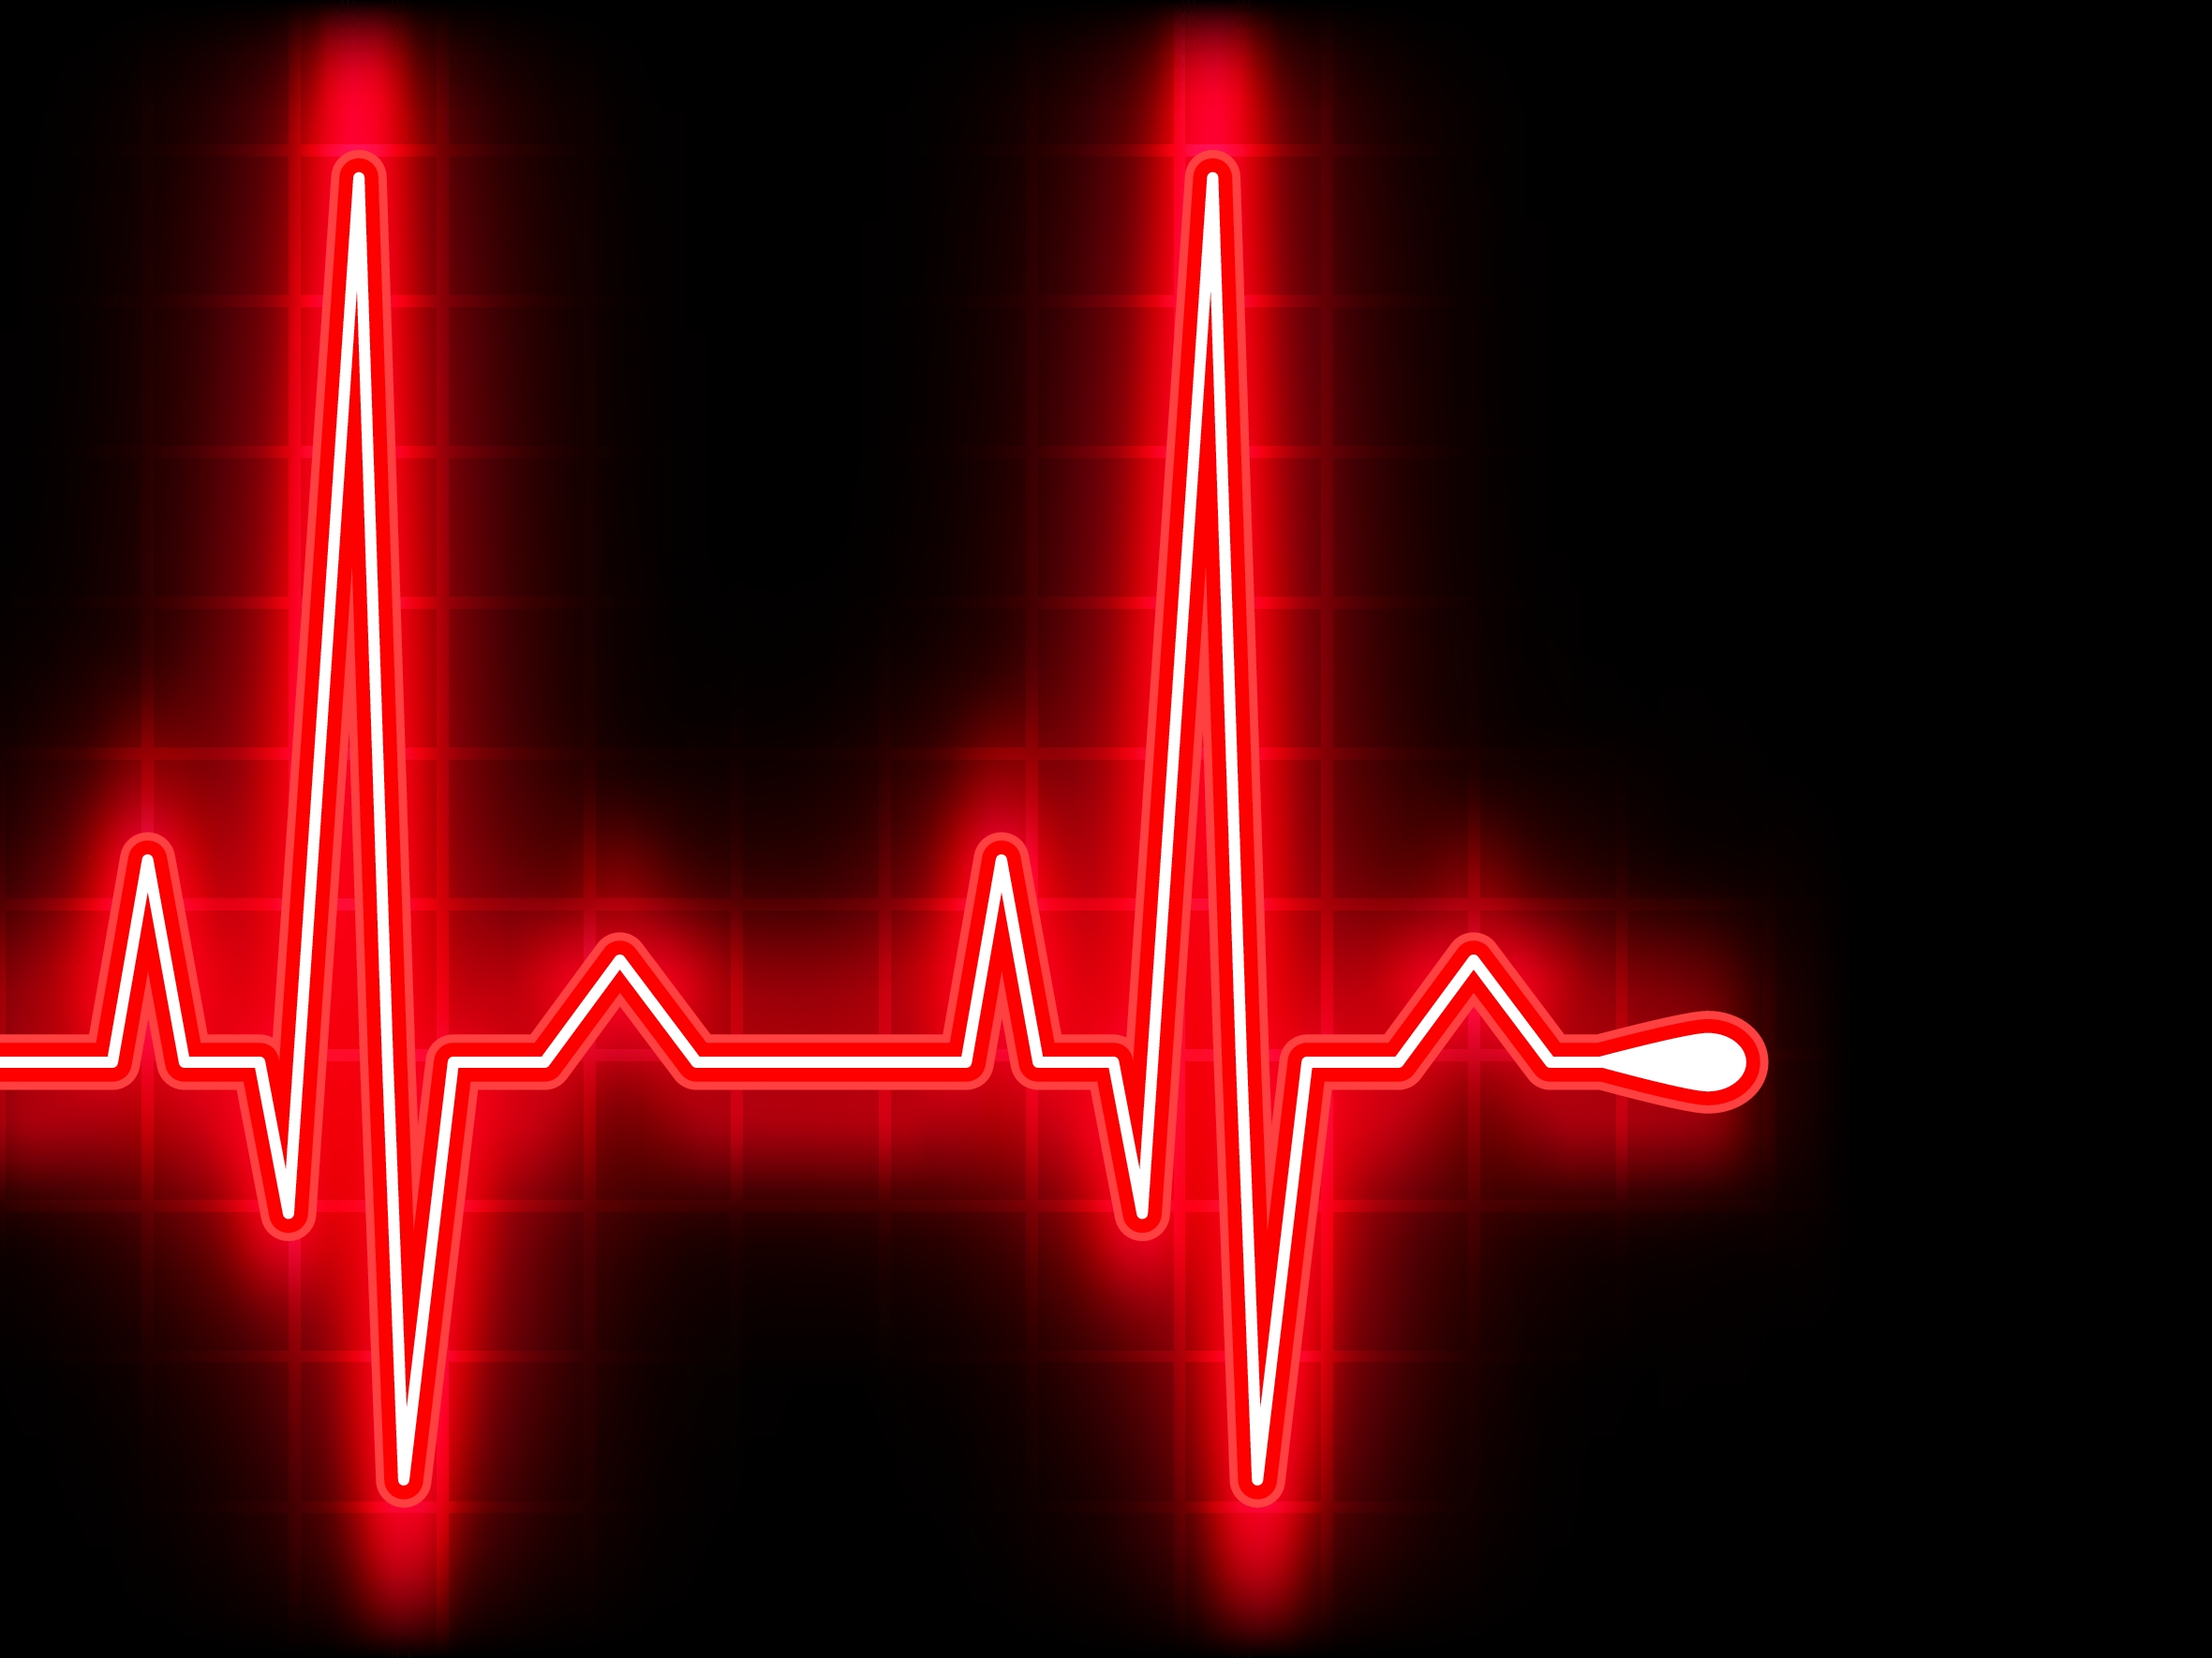 Звук адреналина. Кардиограмма серлце. Пульс сердца. Пульс на черном фоне. Сердце с линией кардиограммы.